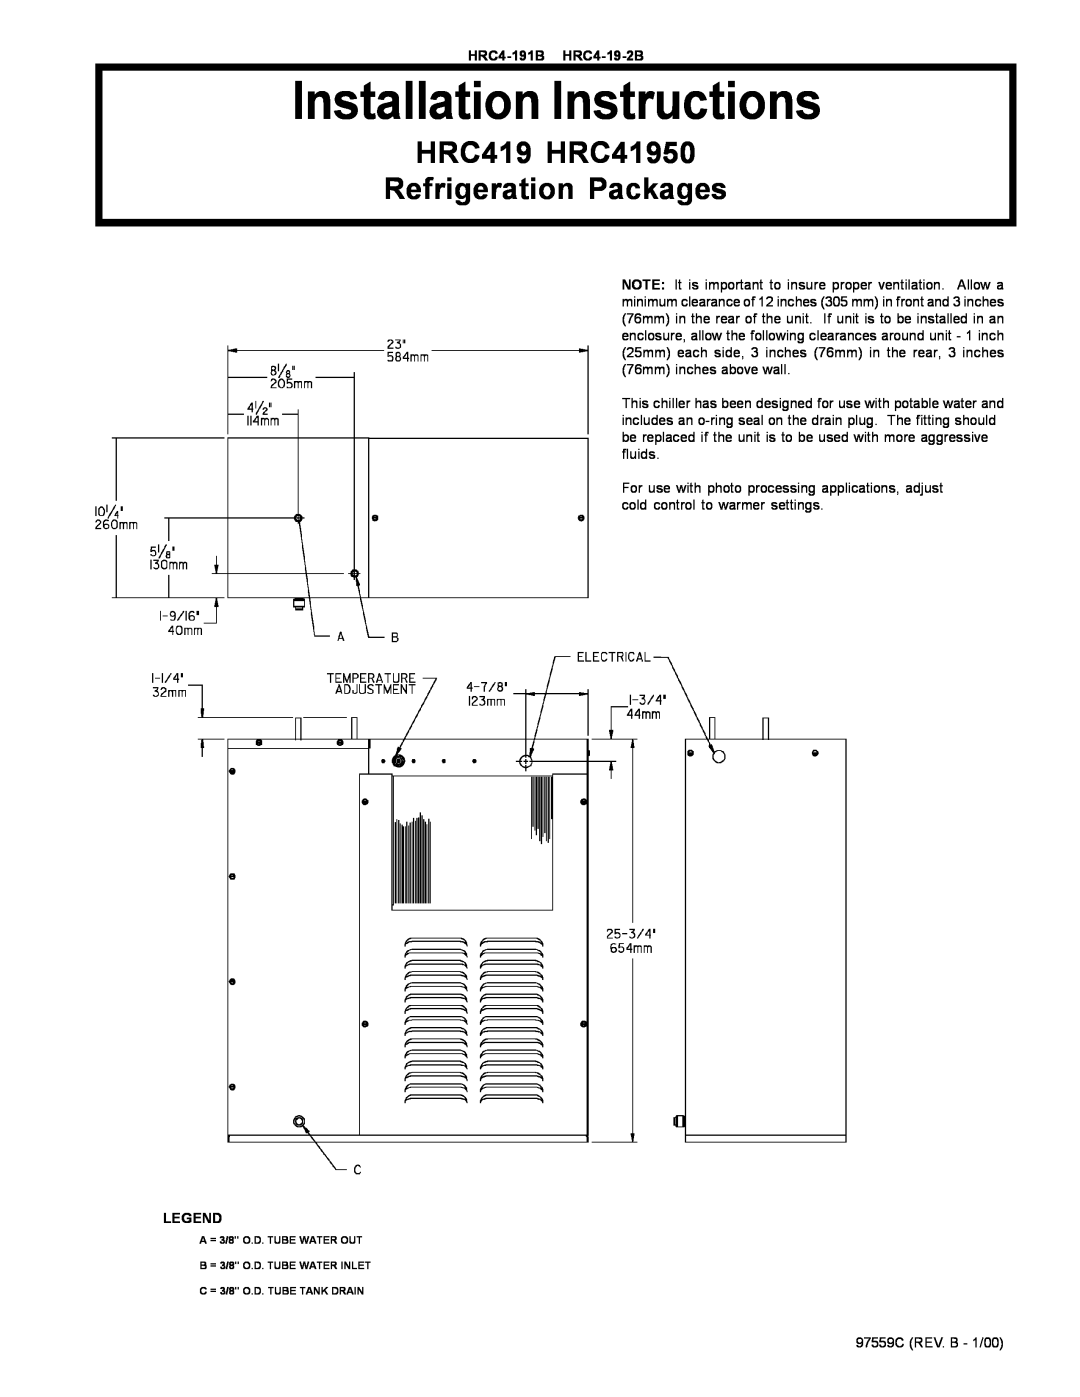 Elkay HRC4-191B installation instructions Installation Instructions, HRC419 HRC41950 Refrigeration Packages 